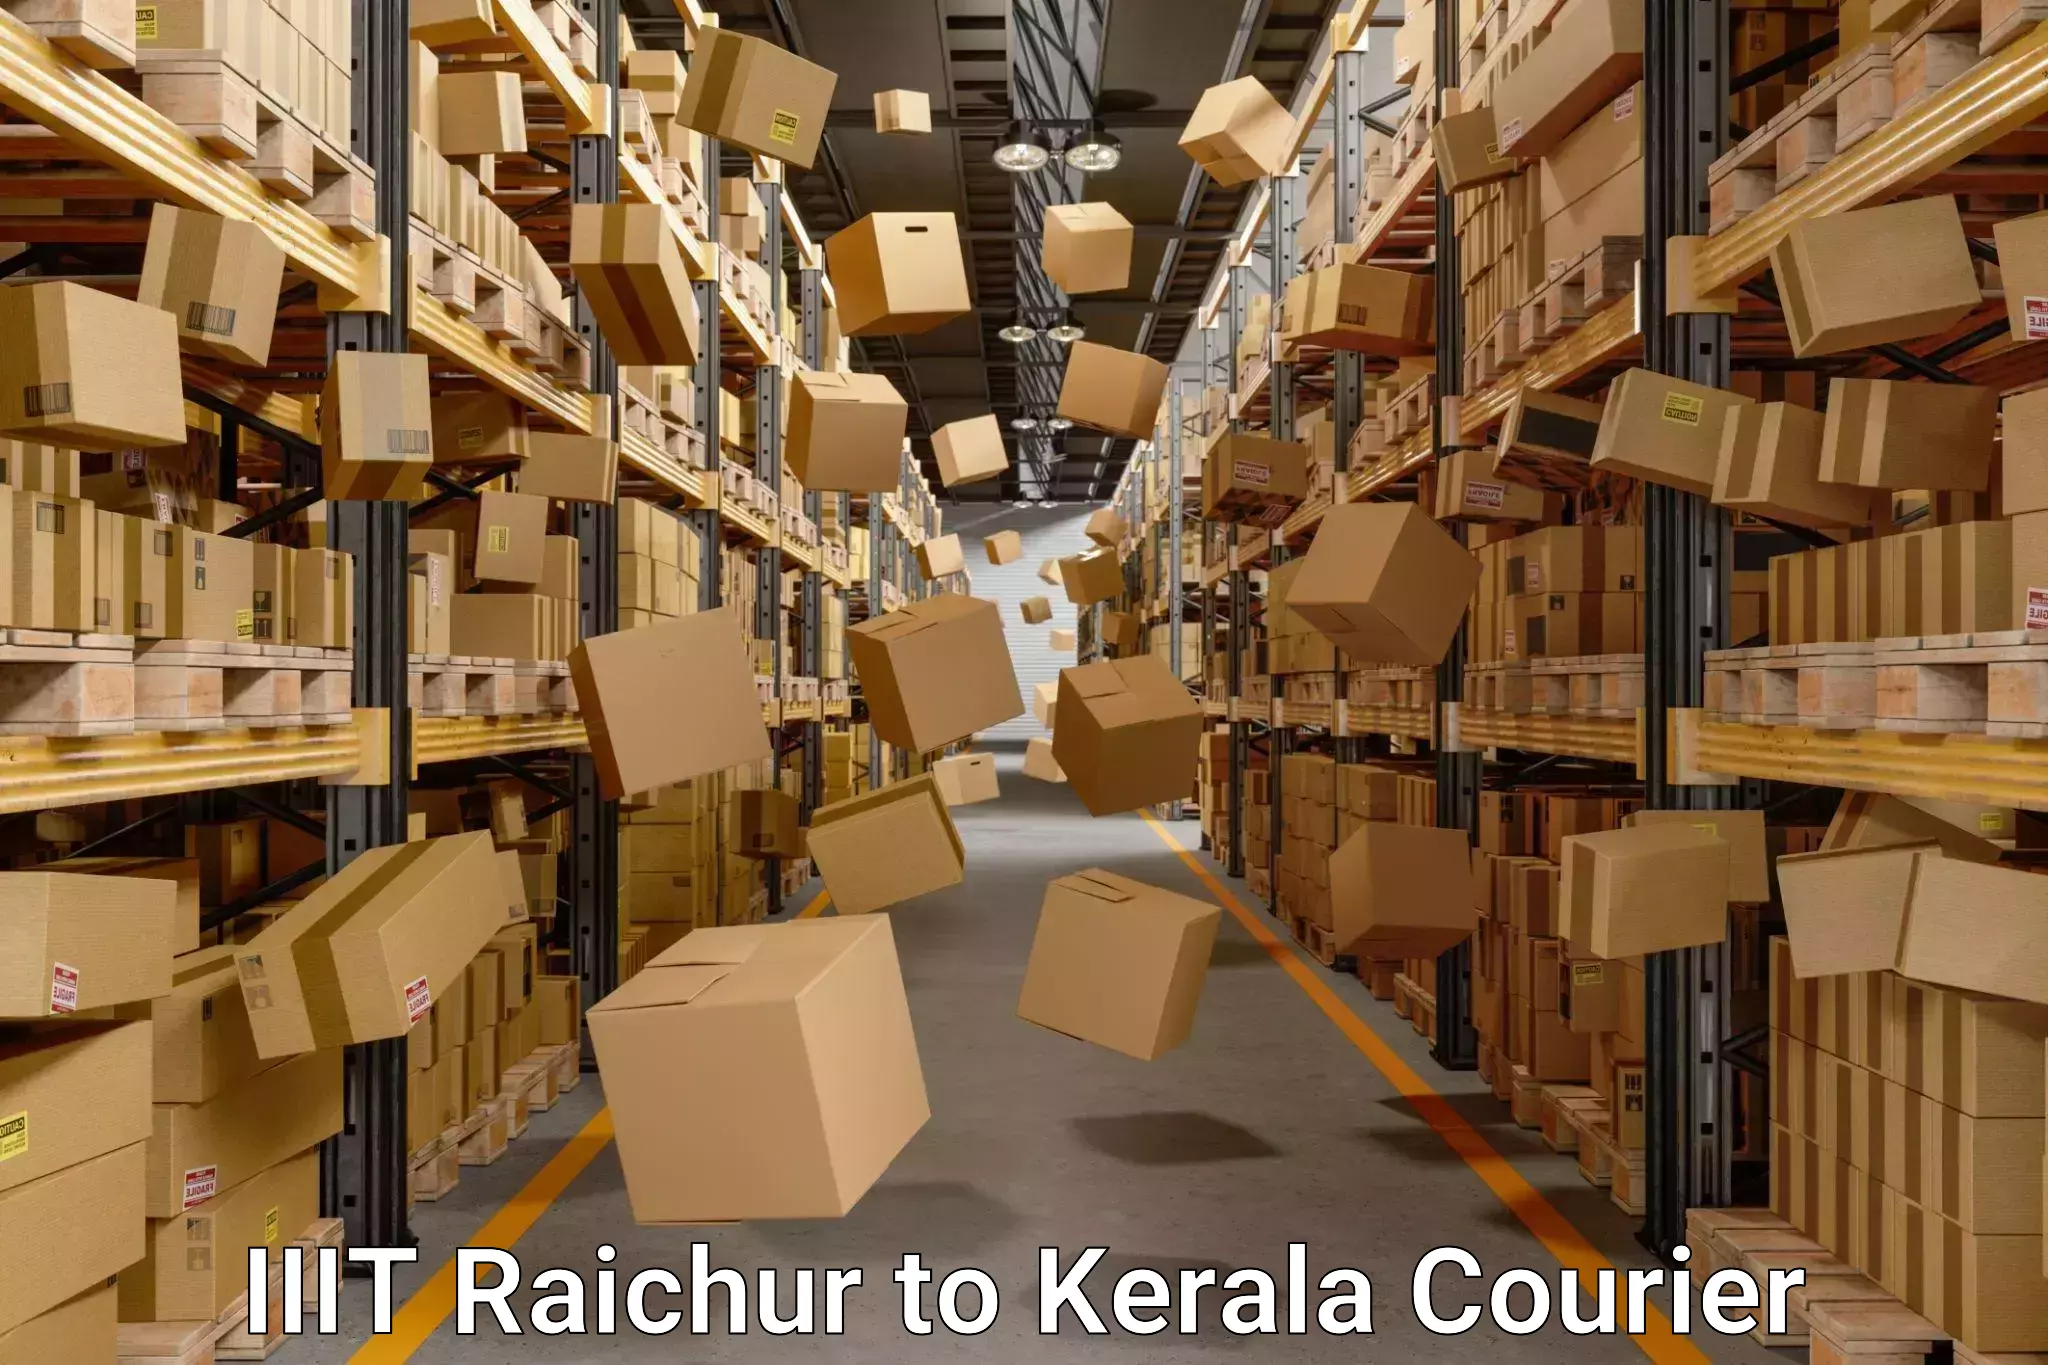 Home moving specialists IIIT Raichur to Kerala